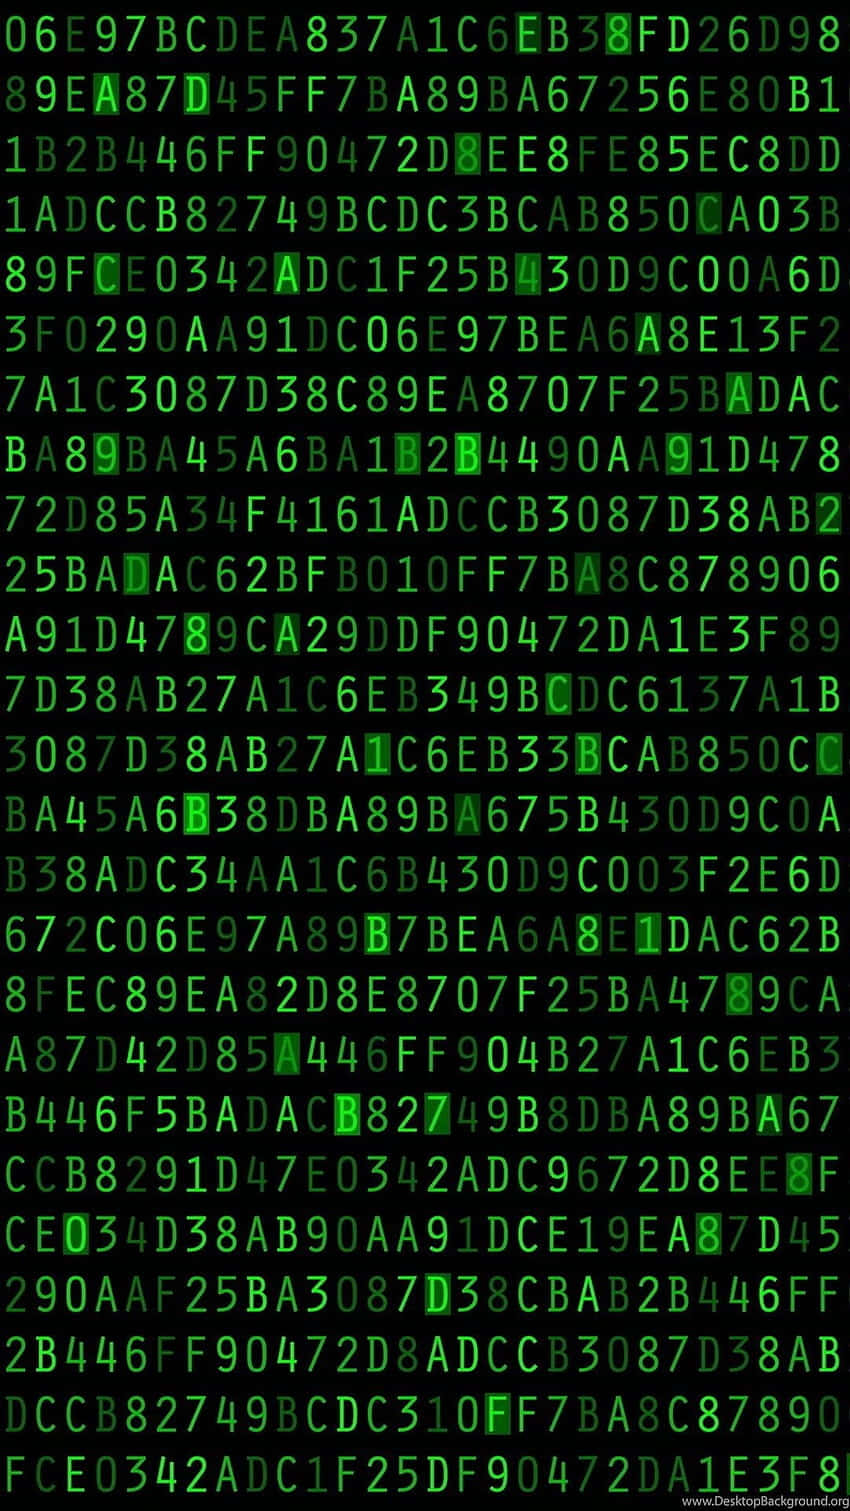 Find Clues in the Matrix Wallpaper